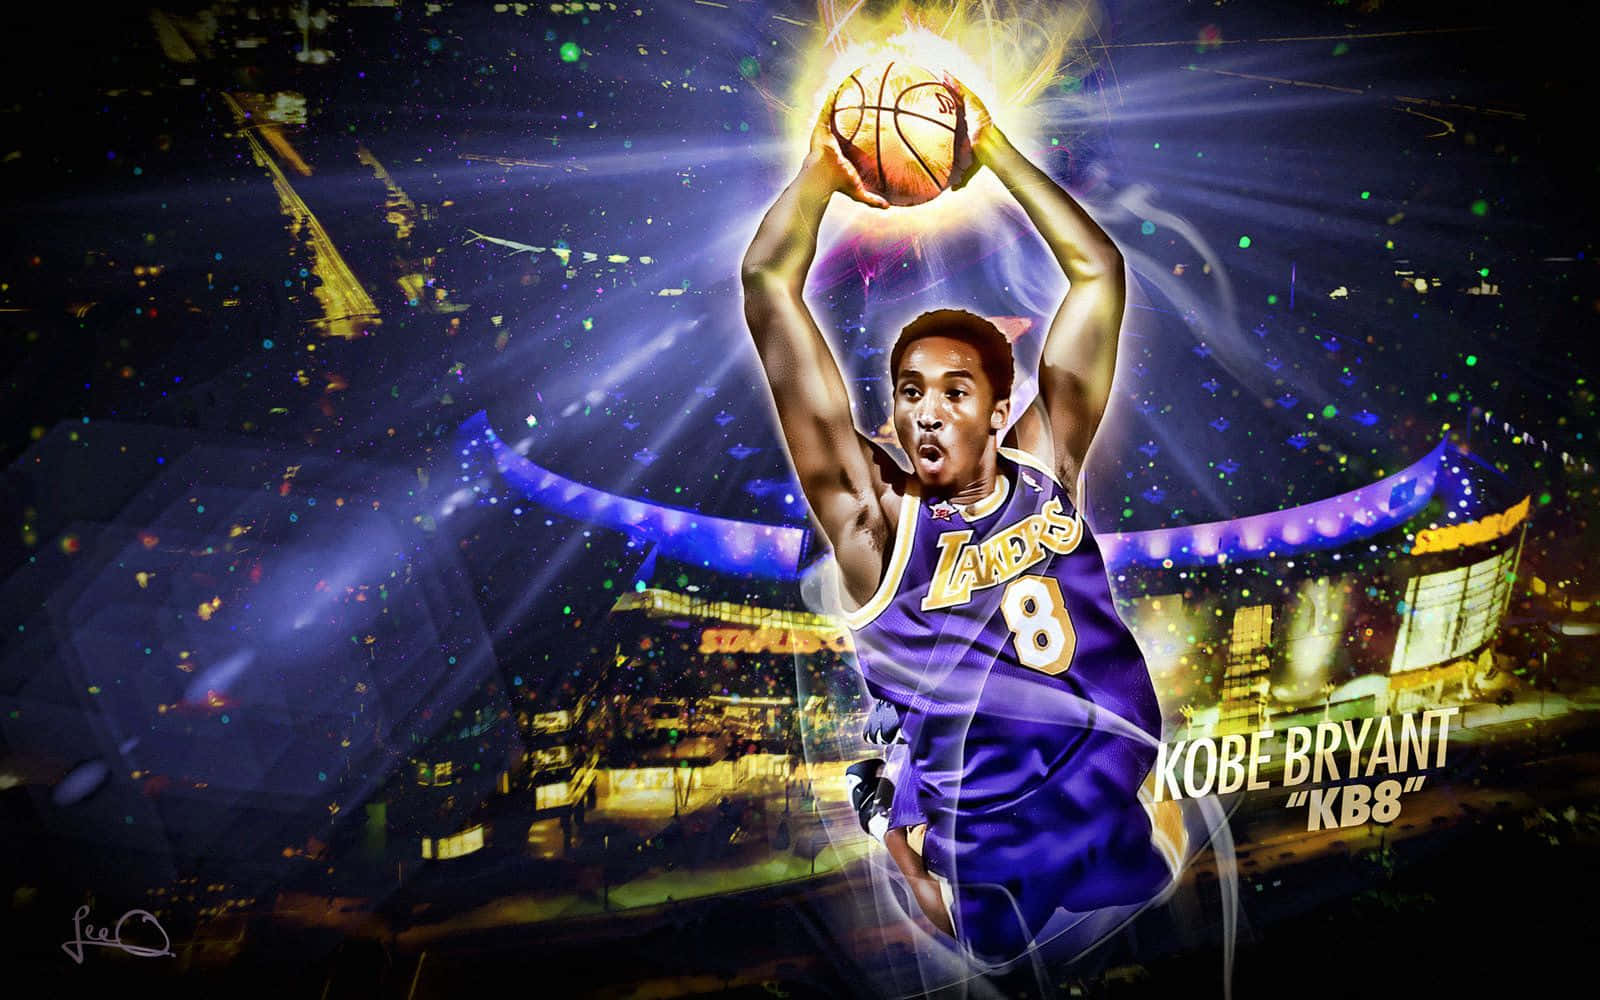 An up-close portrait of Basketball Legend Kobe Bryant